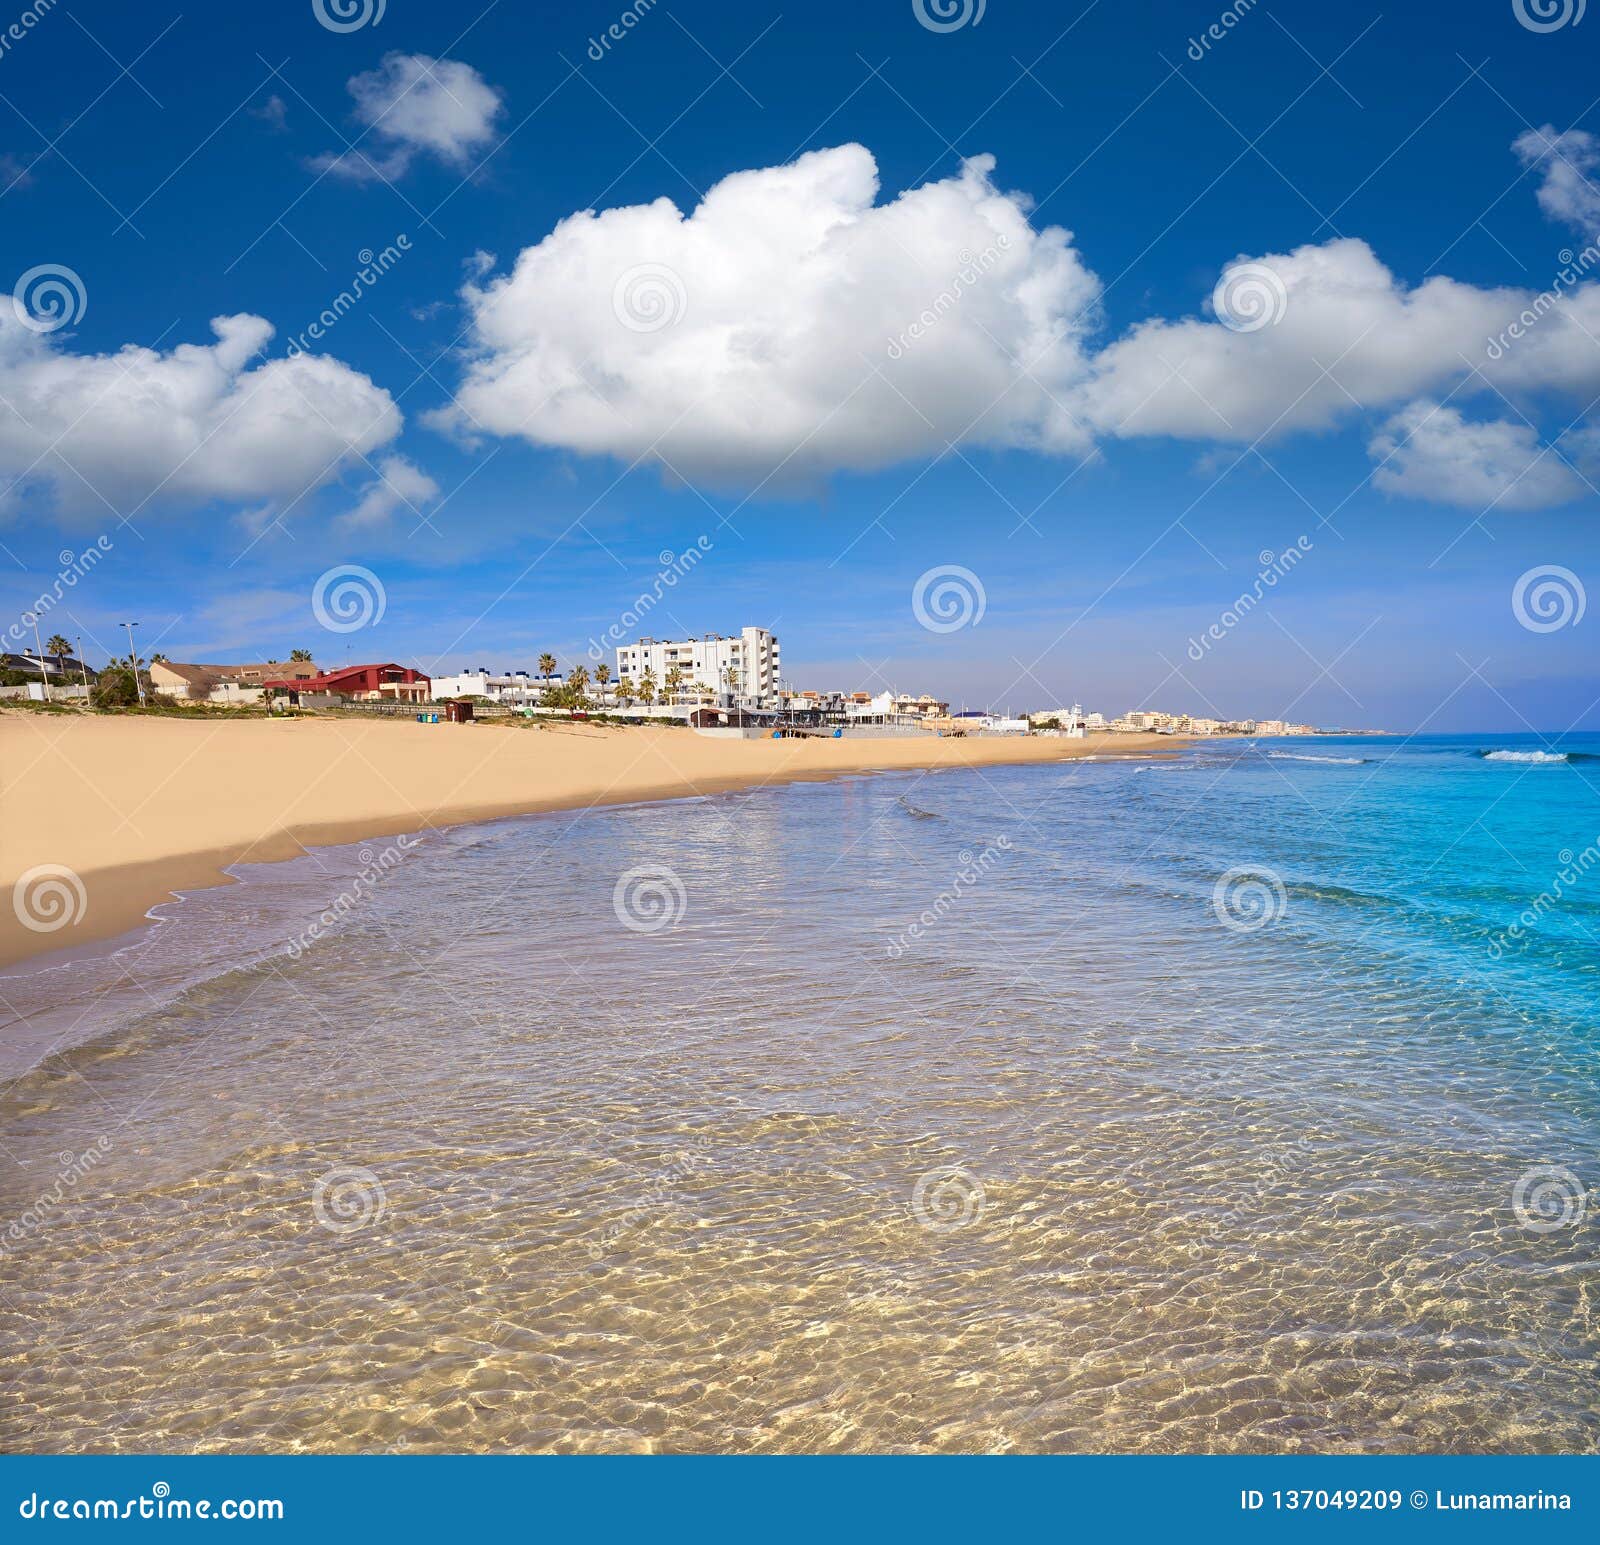 Vuiligheid maandag langs Playa De La Mata Beach in Torrevieja Spain Stock Image - Image of ocean,  scenic: 137049209